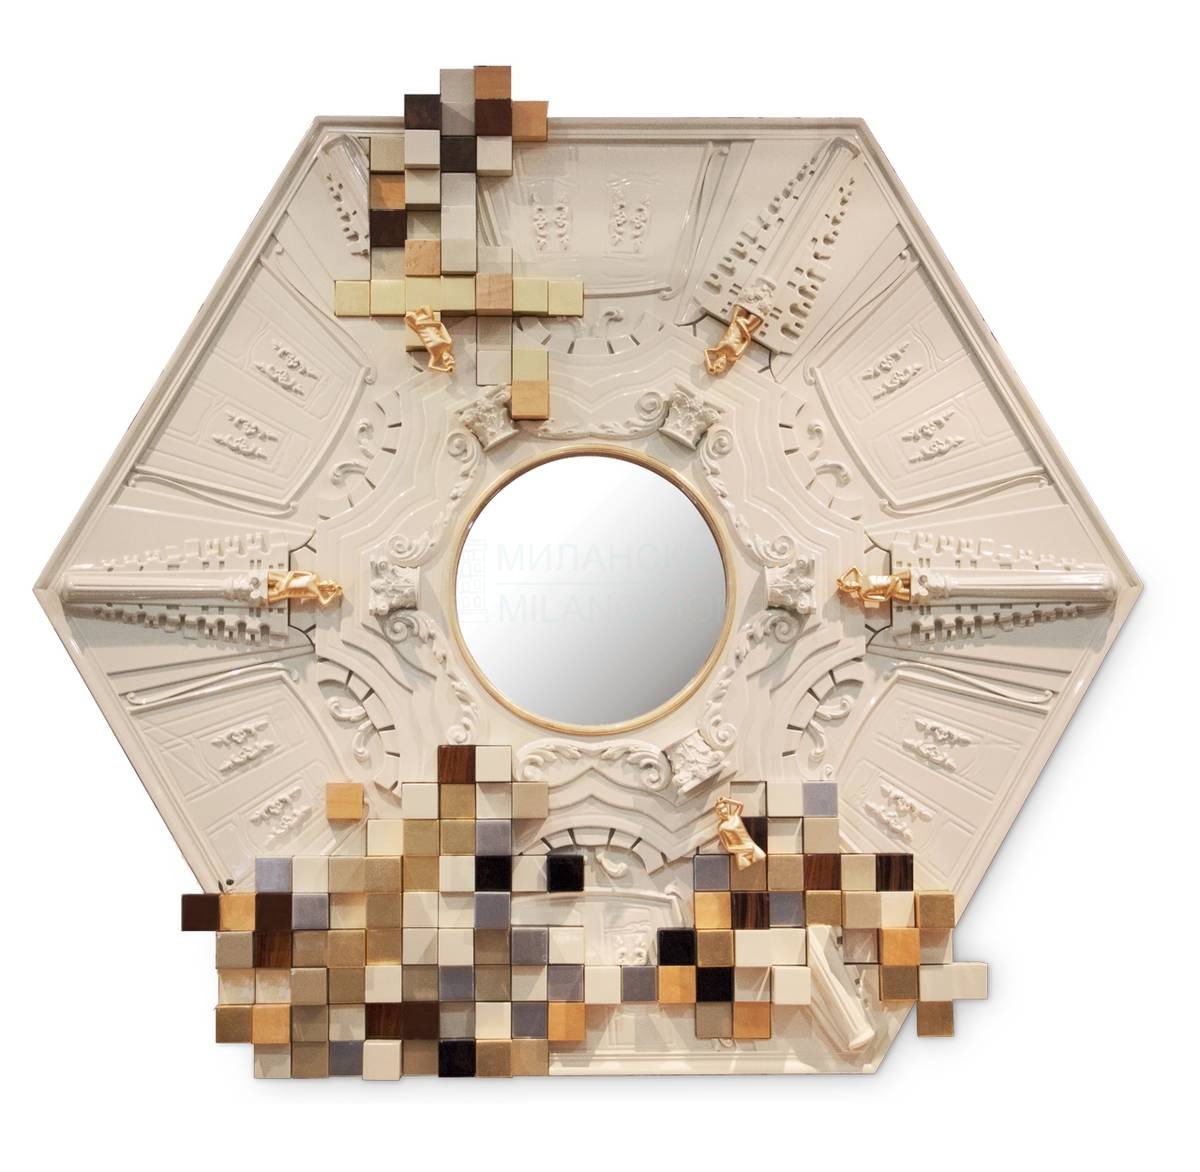 Зеркало настенное Piccadilly/mirror из Португалии фабрики BOCA DO LOBO